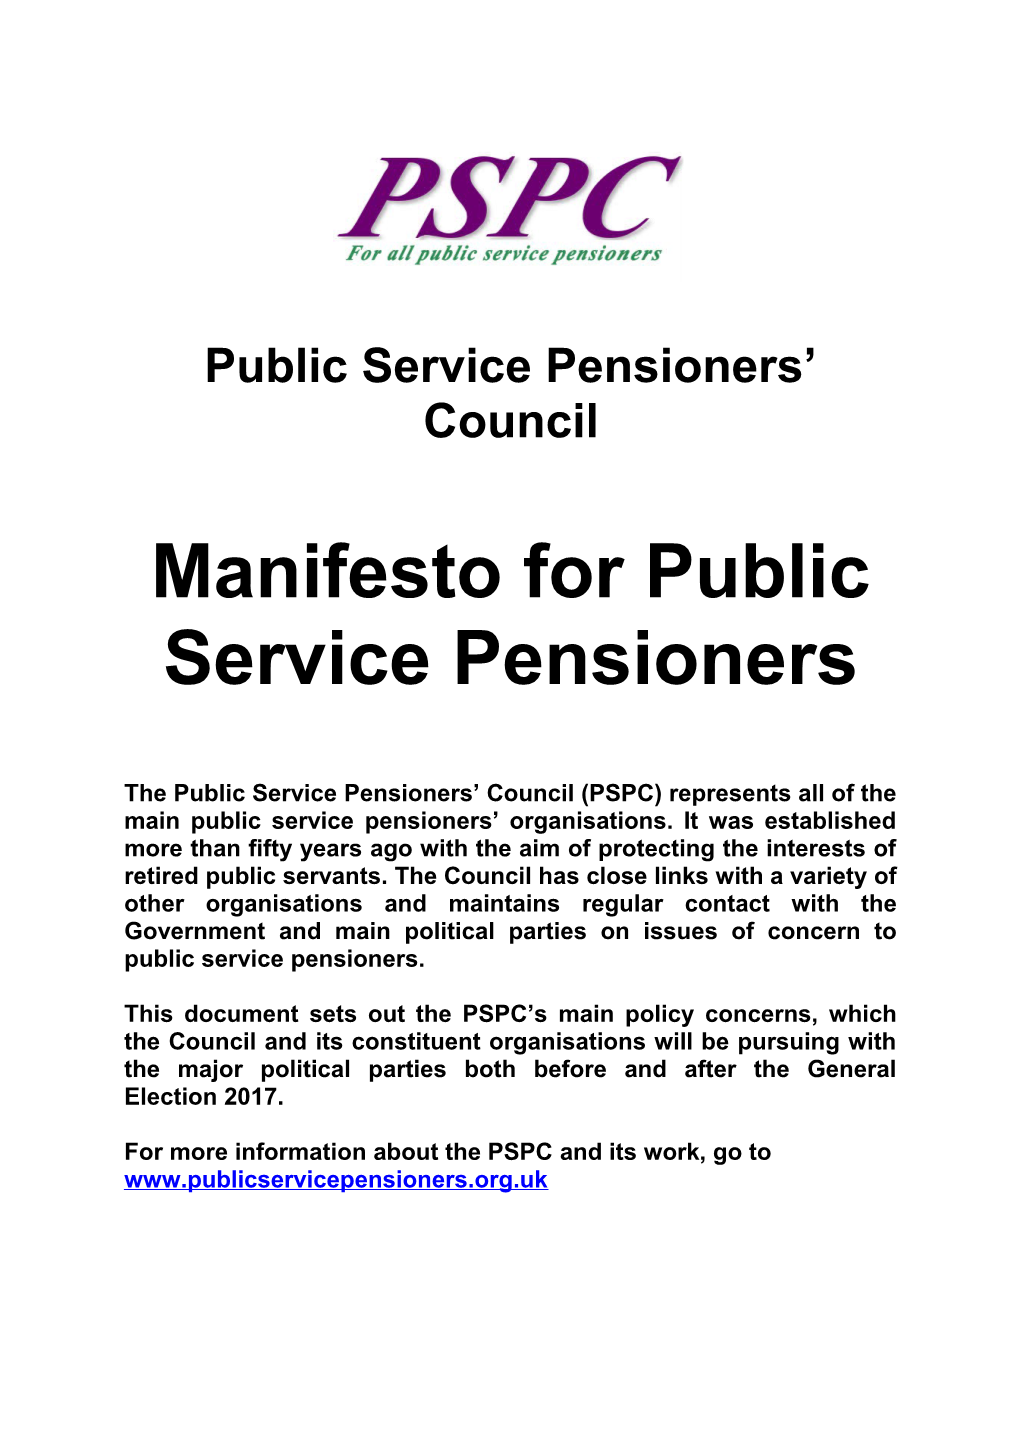 Public Service Pensioners Council